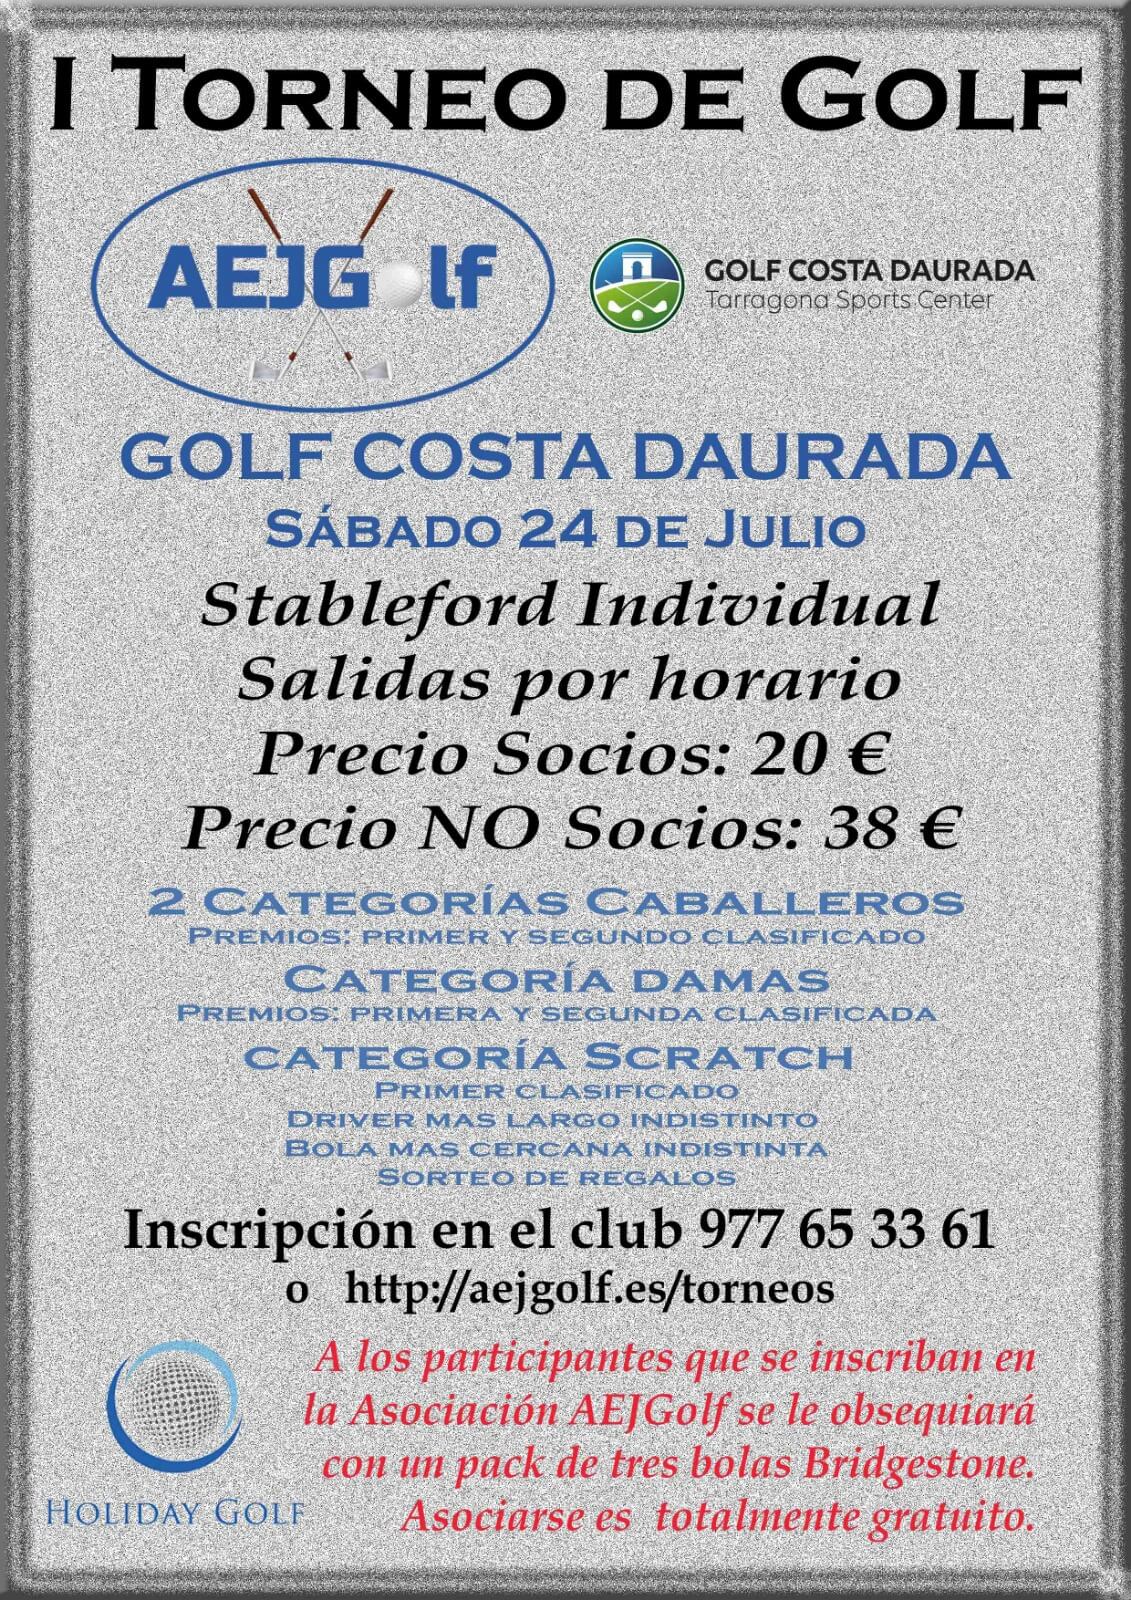 I Torneo de Golf AEJGolf GOLF COSTA DAURADA